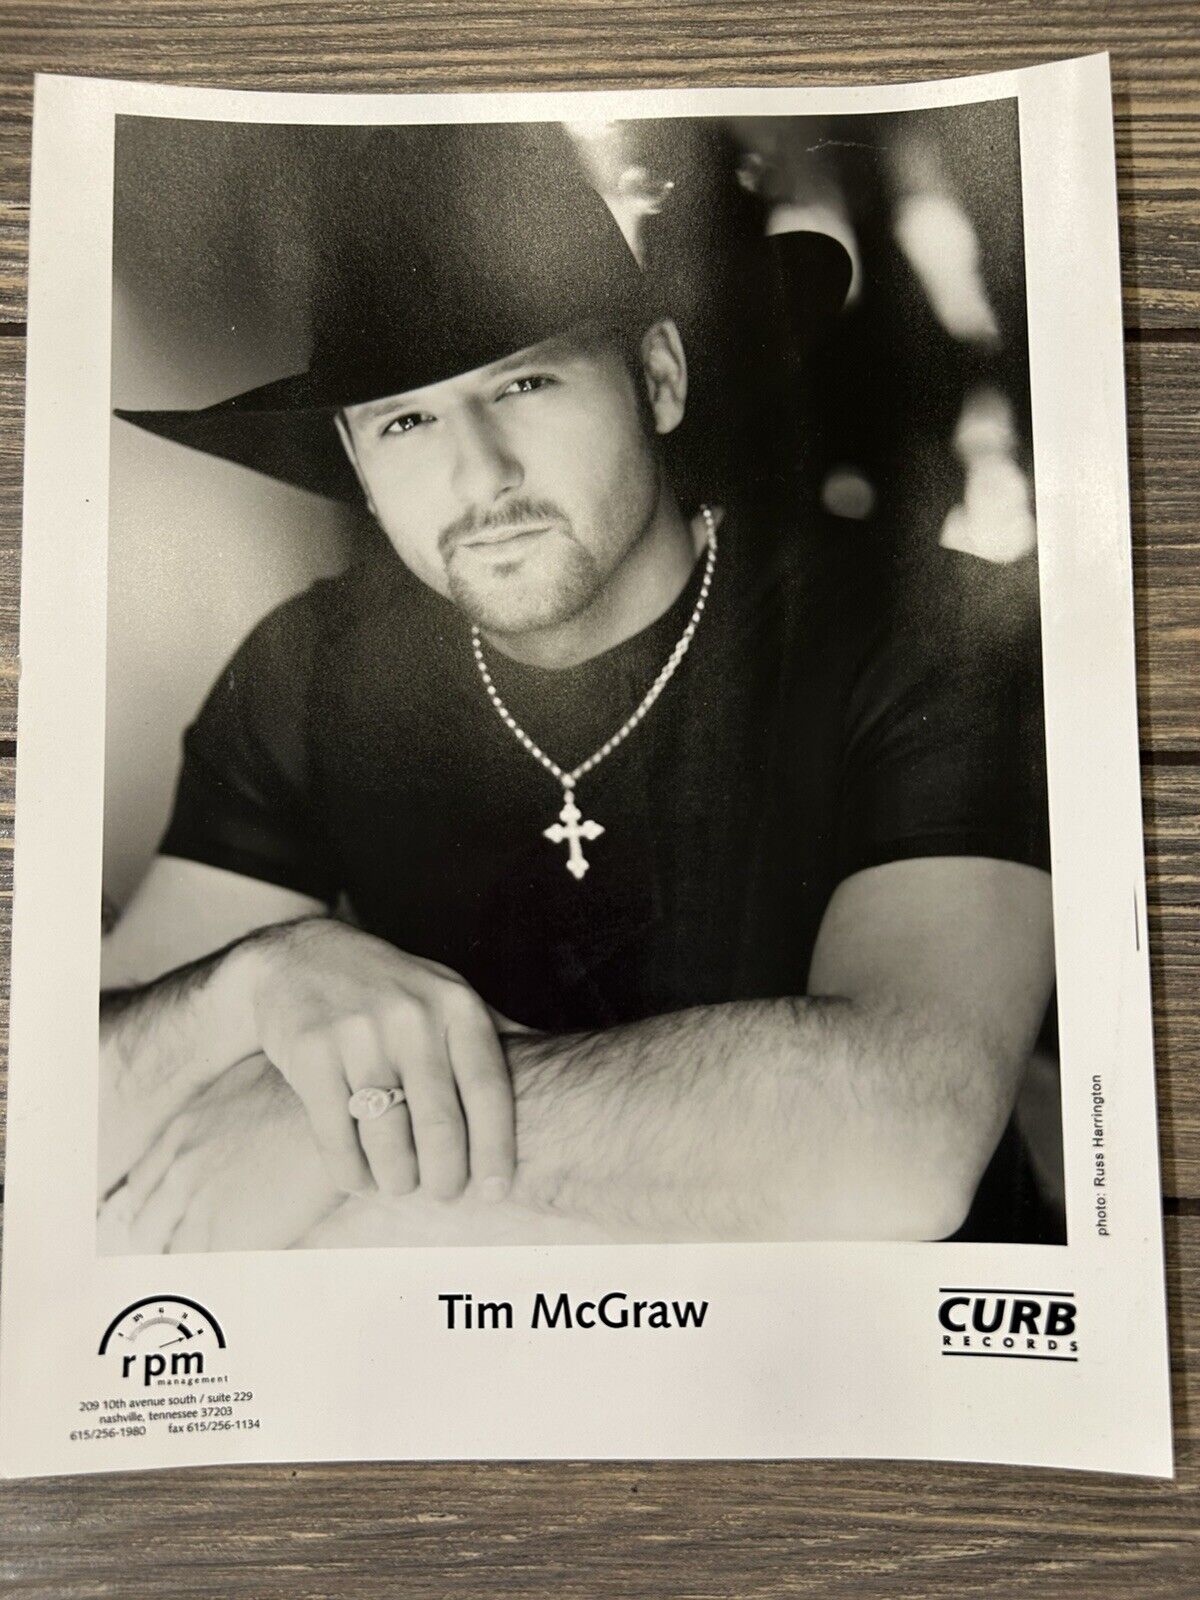 Vintage Tim McGraw Press Release Photo 8x10 Black White Curb Records